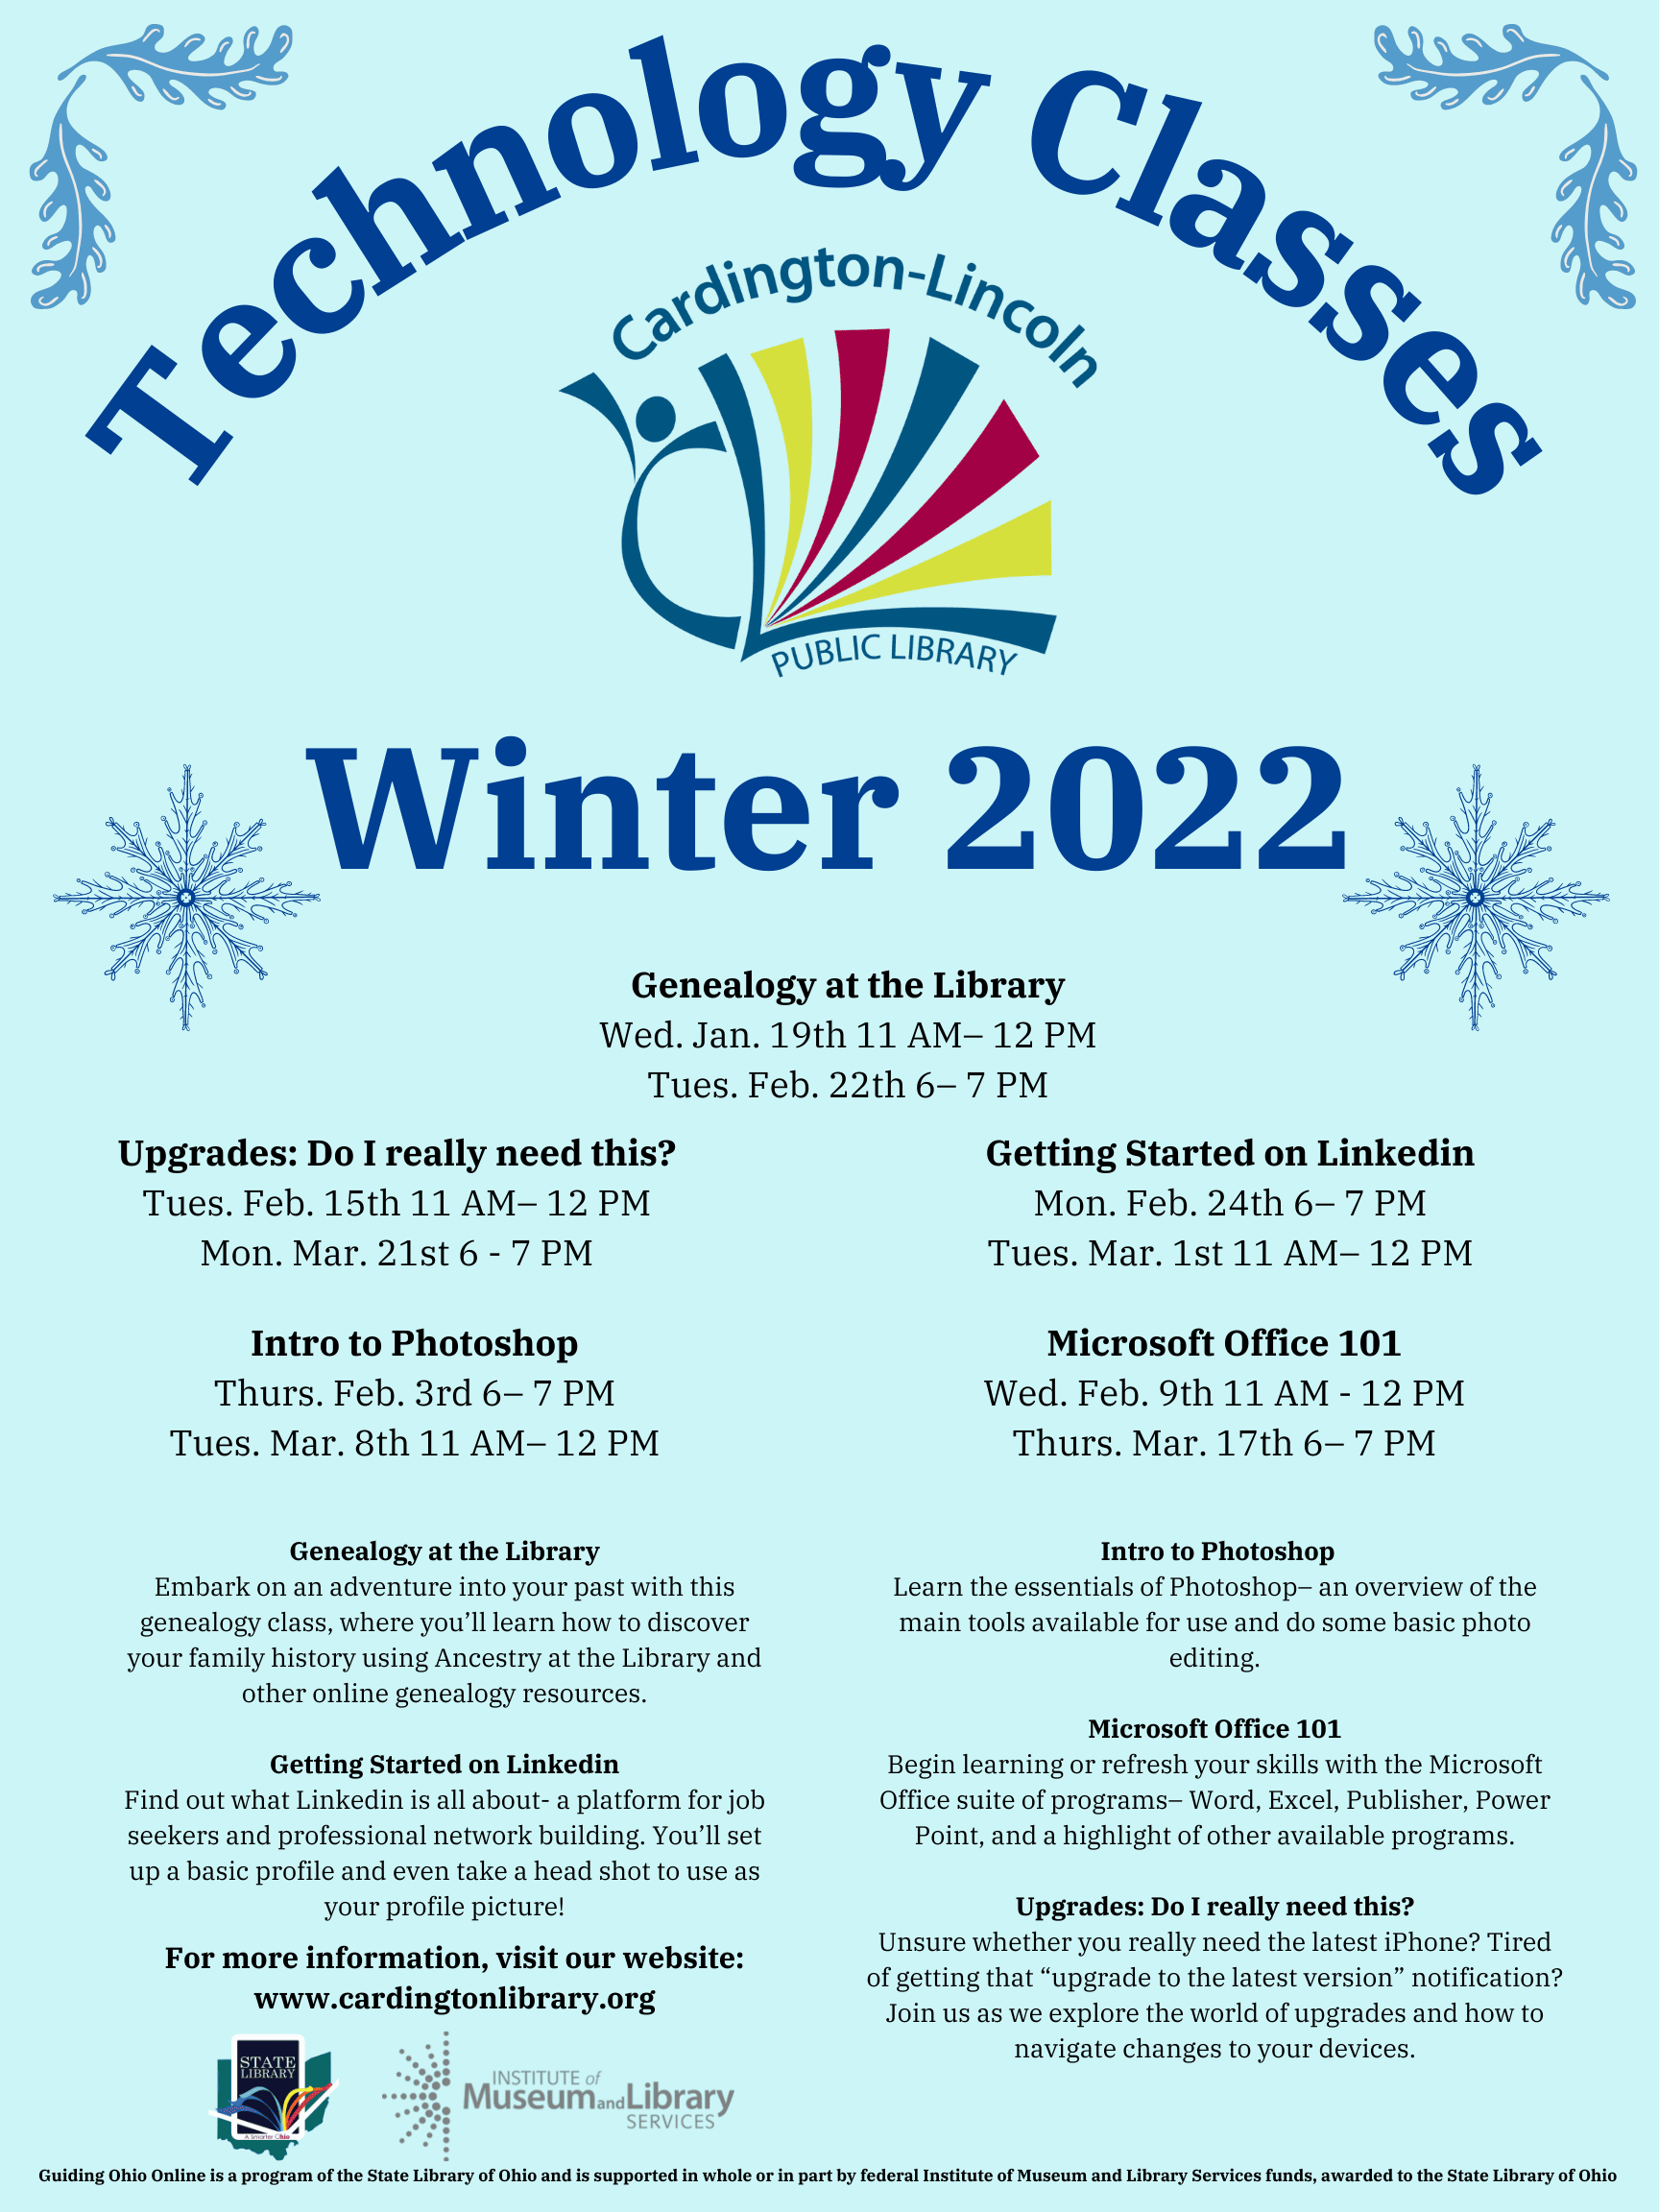 Winter Technology Classes 2022